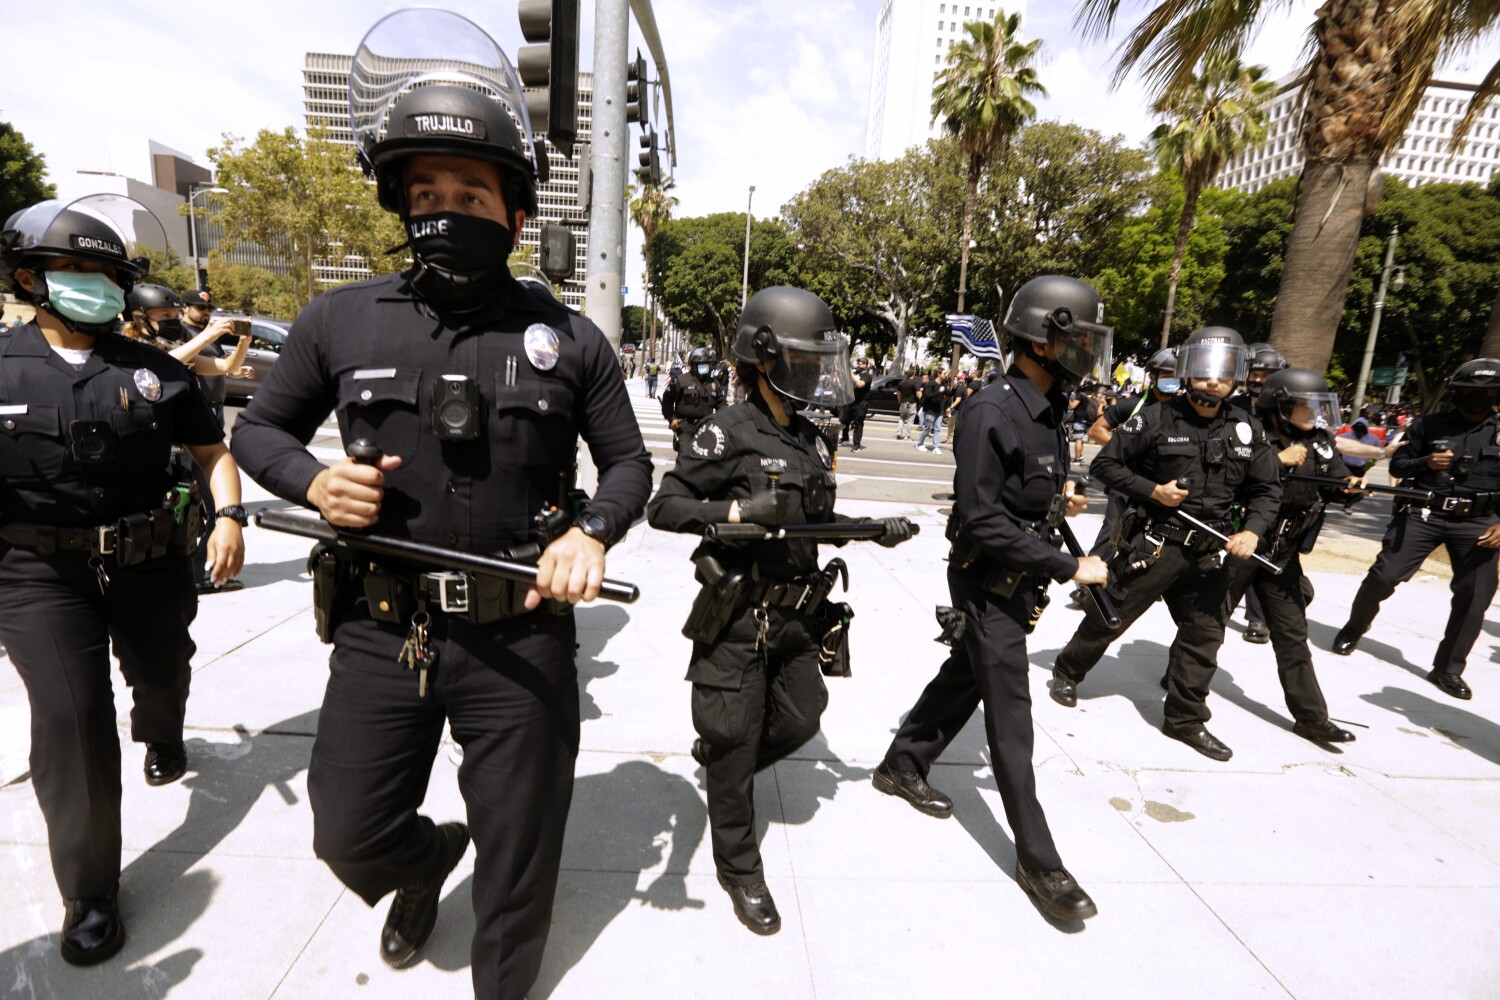 Los Angeles police release description of man suspected in vaccine protest stabbing